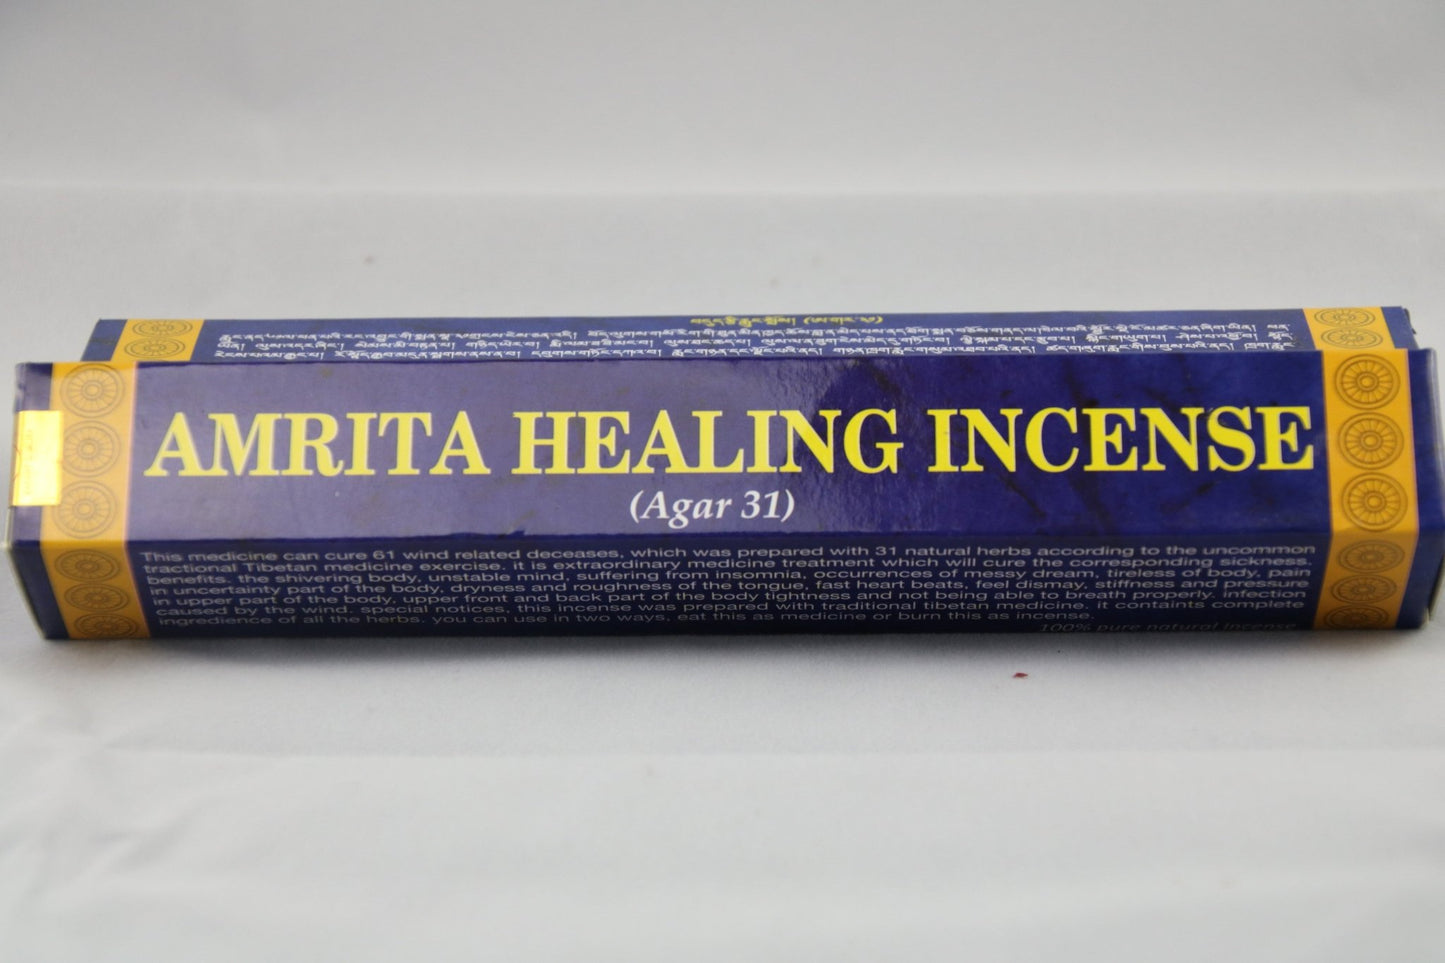 Amrita Healing Incense